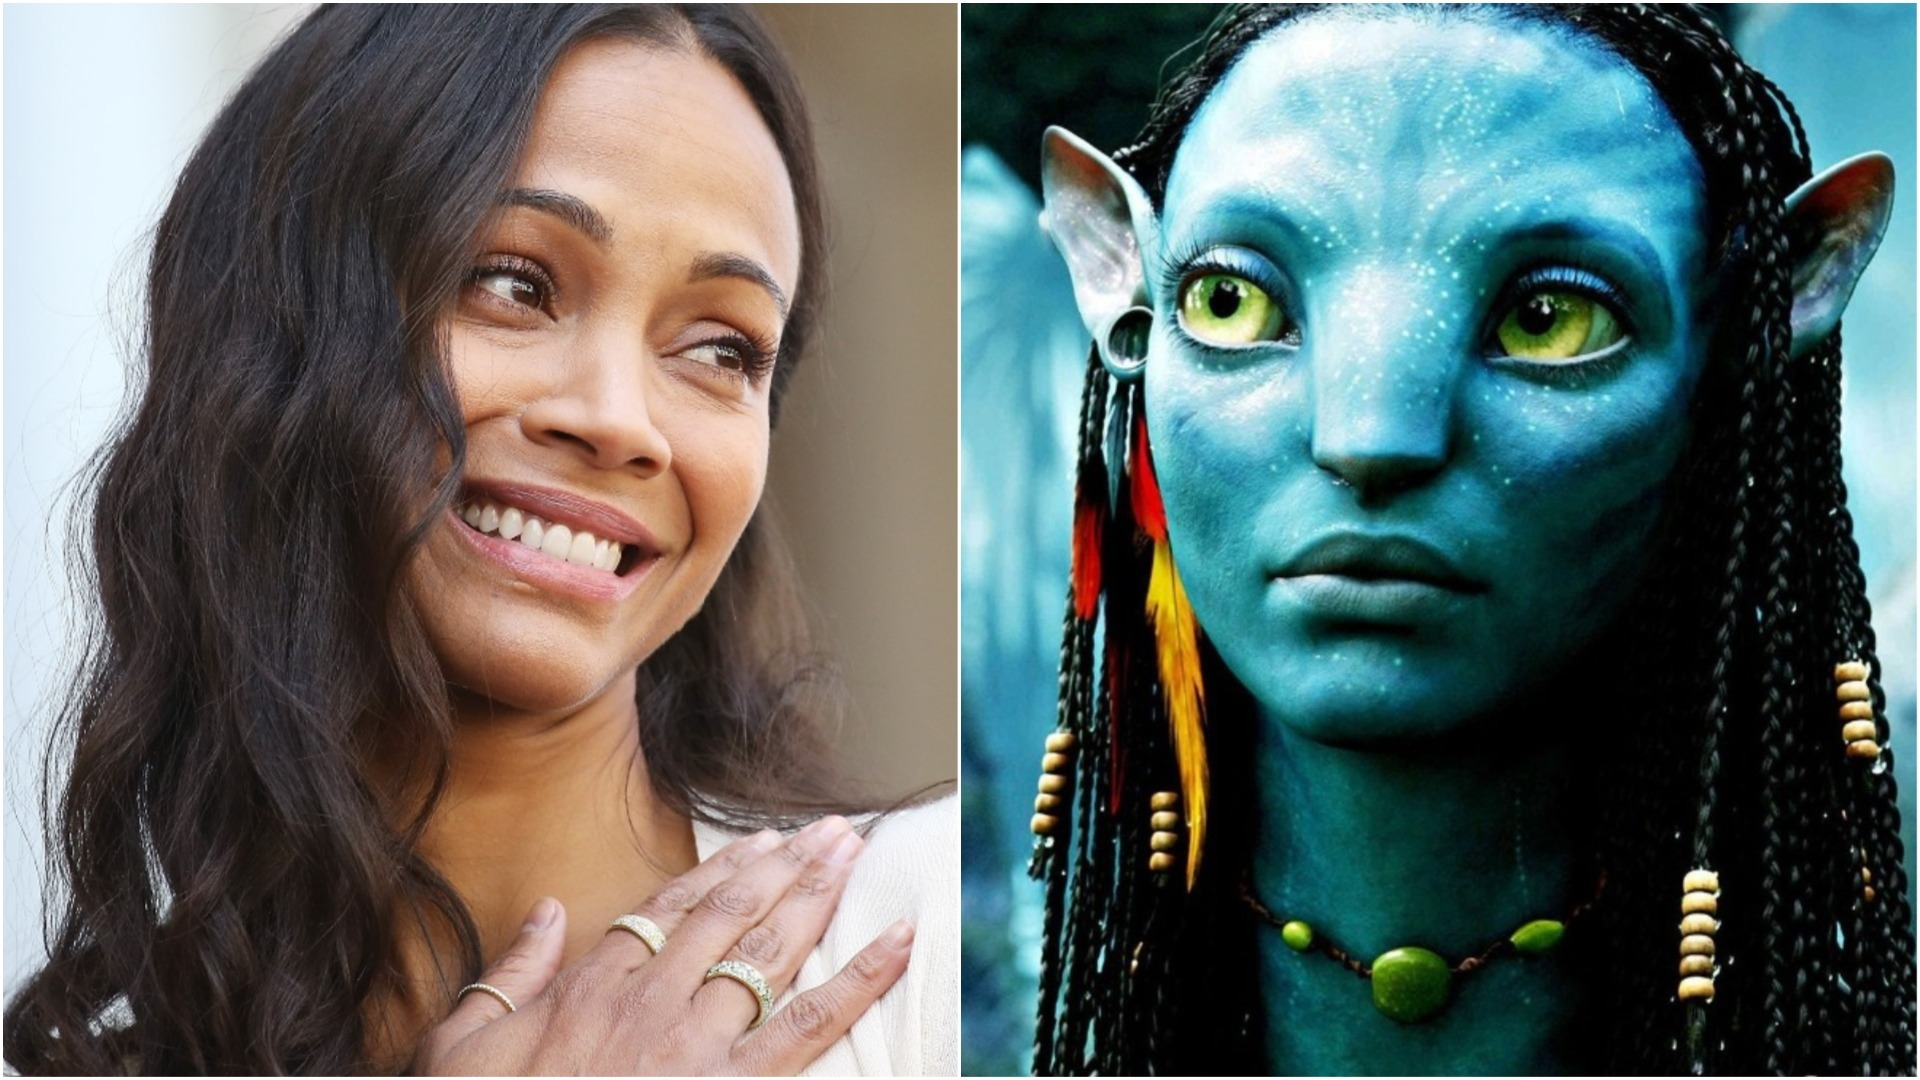 Zoe Saldana Talks Filming Avatar In This Exclusive Unpublished Interview